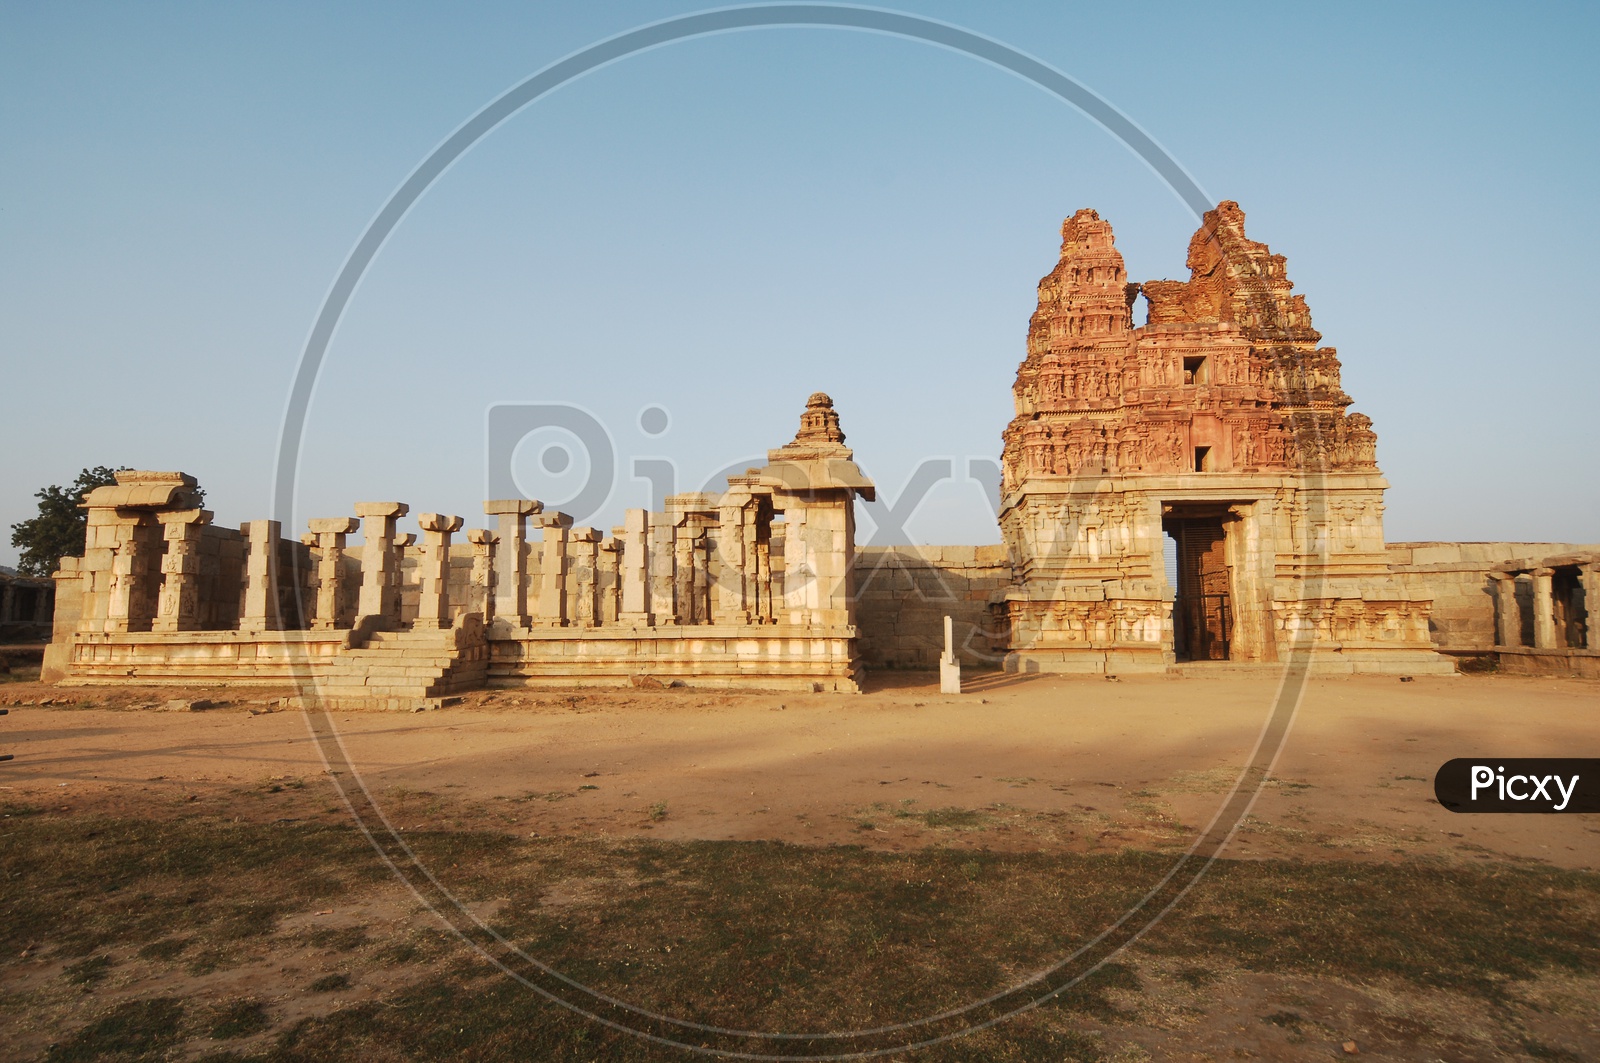 Vittala temple alongside the stone pillar temple